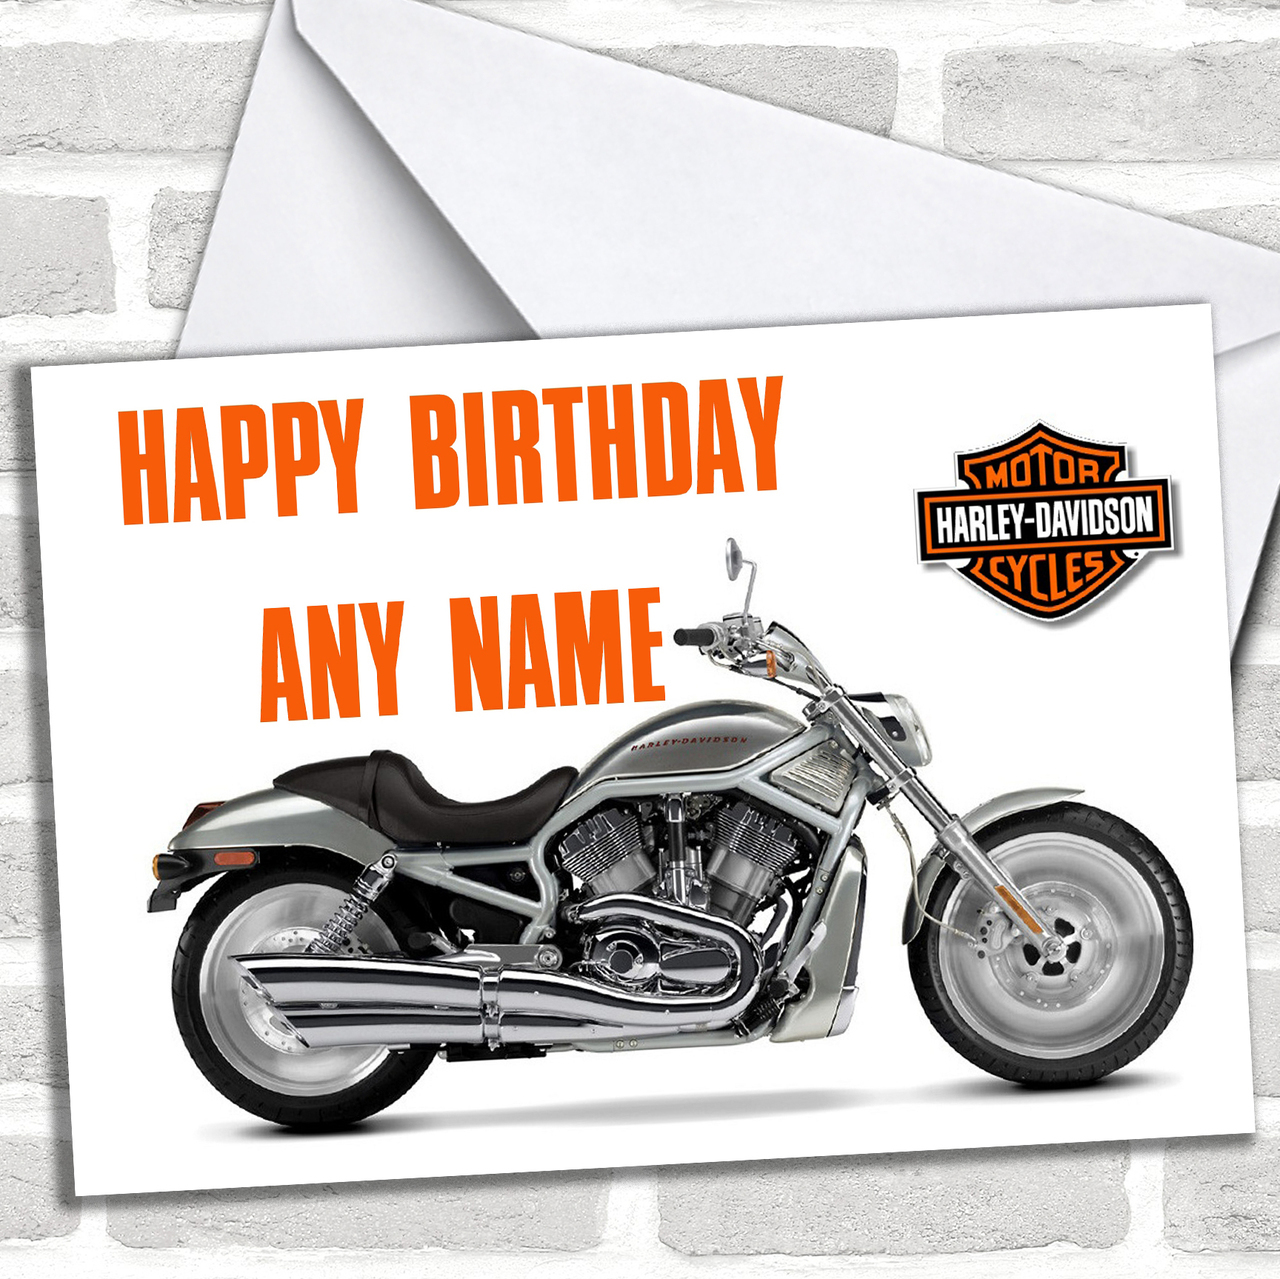 Harley Davidson Birthday Cards Free - KibrisPDR